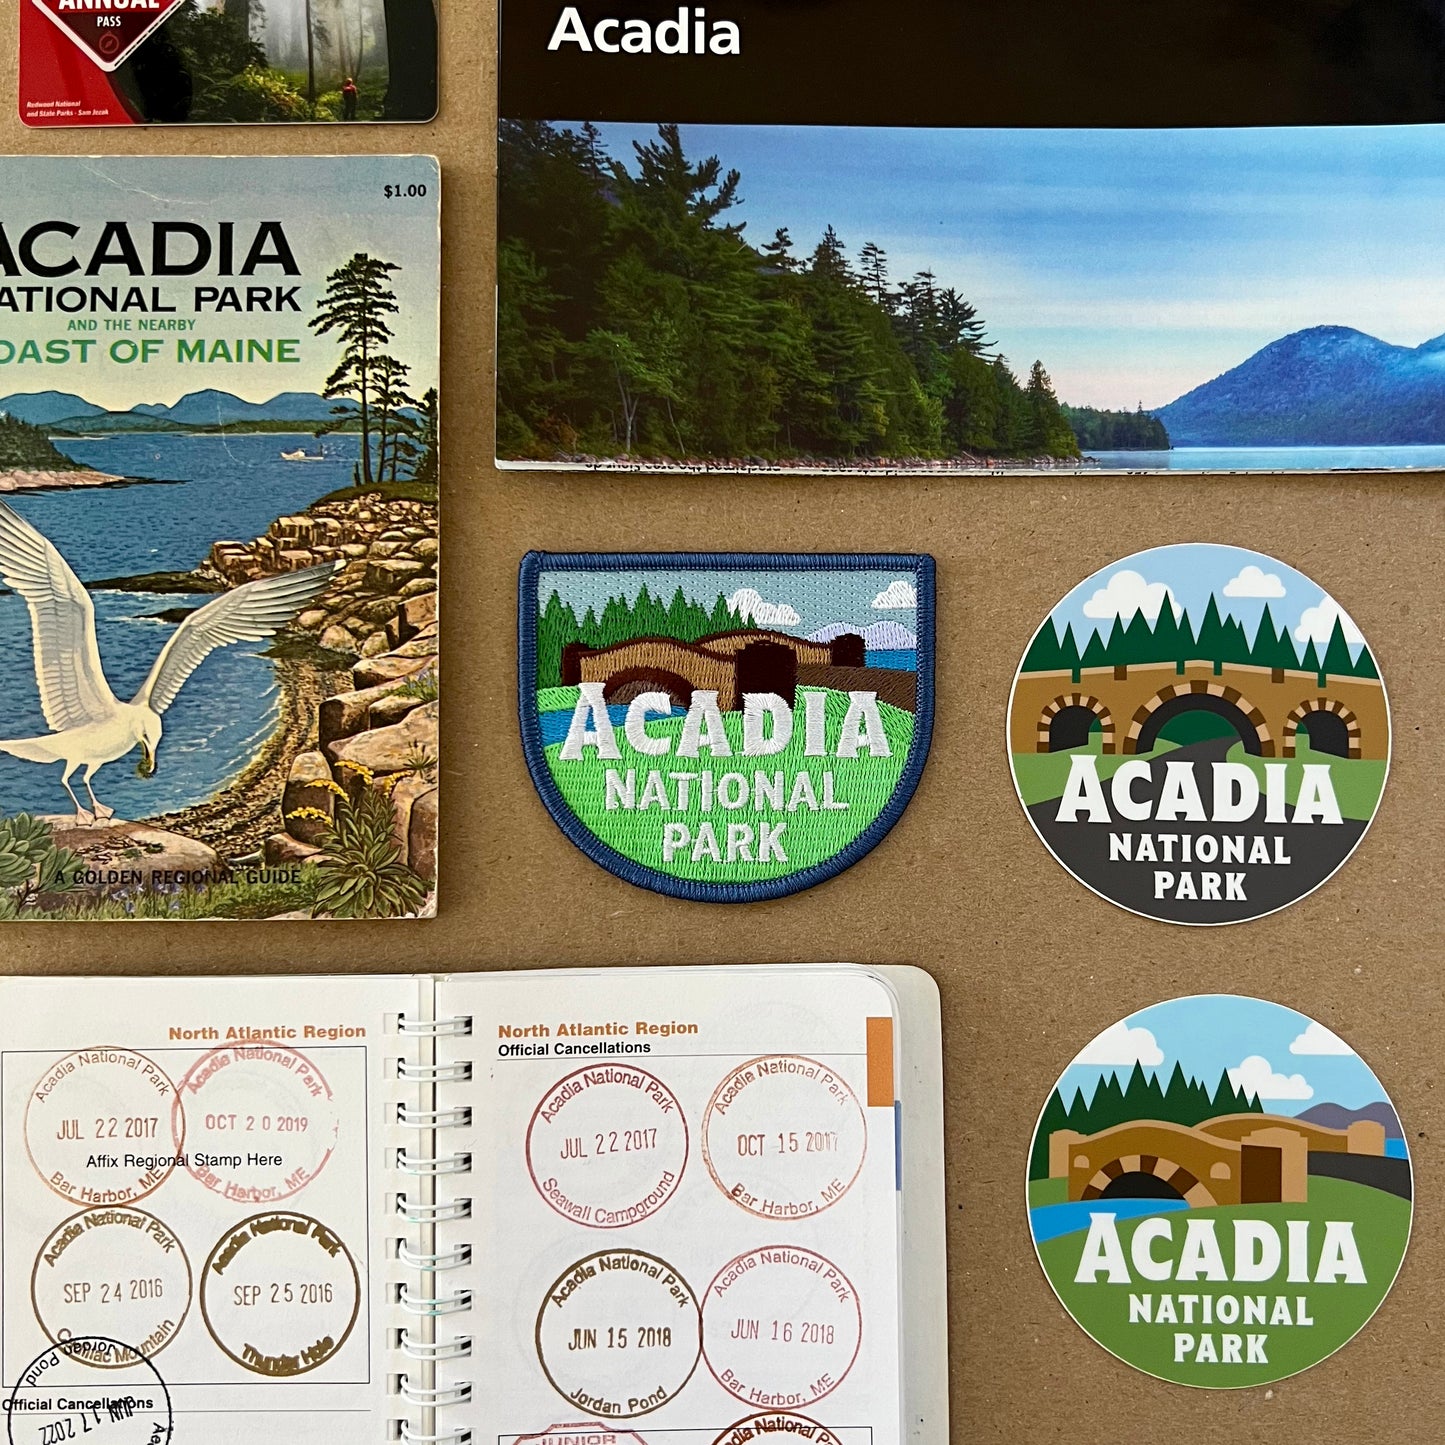 Acadia National Park Sticker (Carriage Road, Jordan Pond Bridge, Maine)